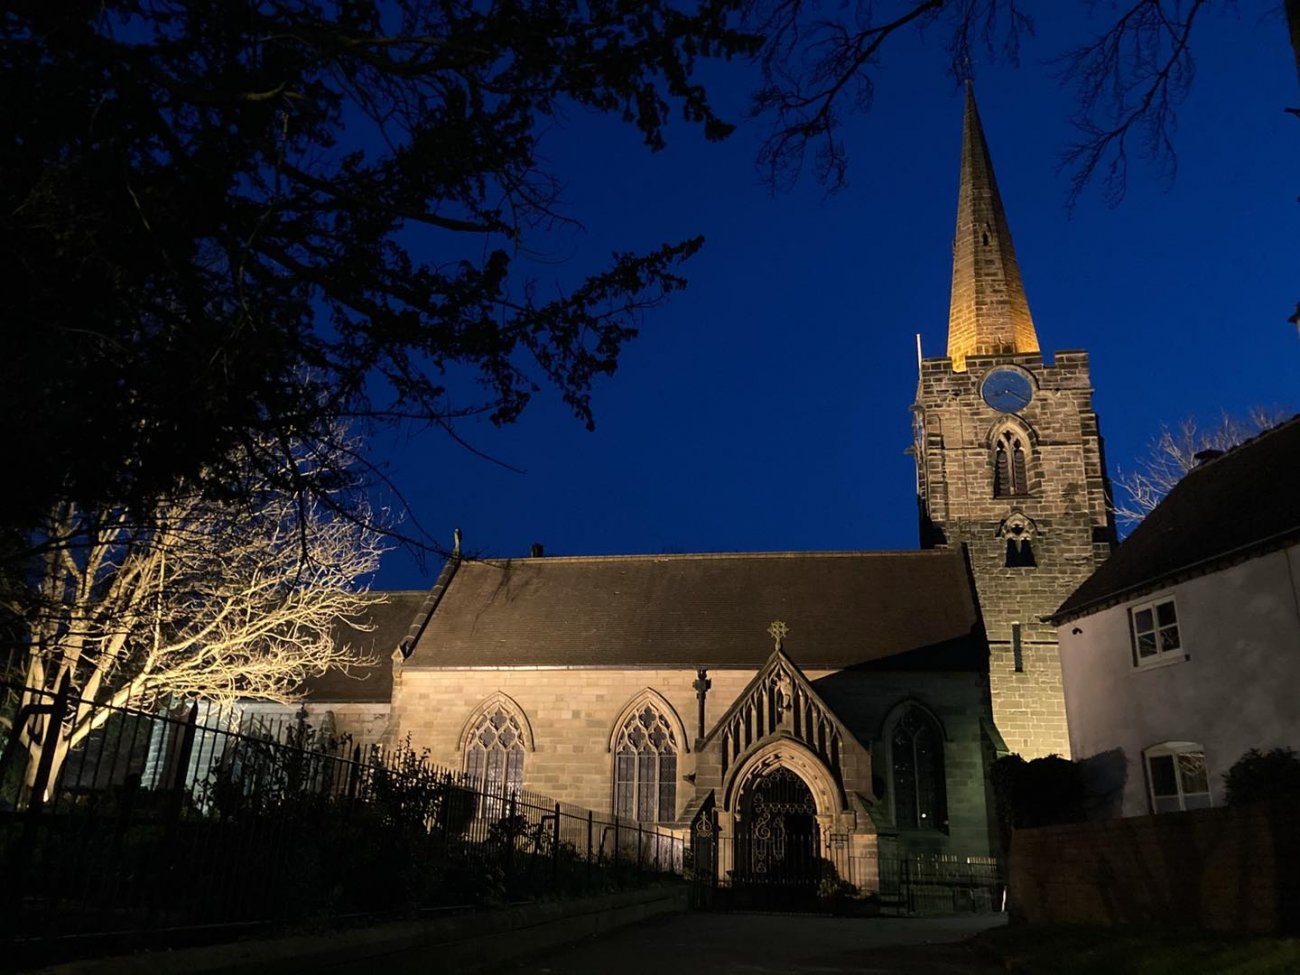 Photograph of St Werburgh's at night